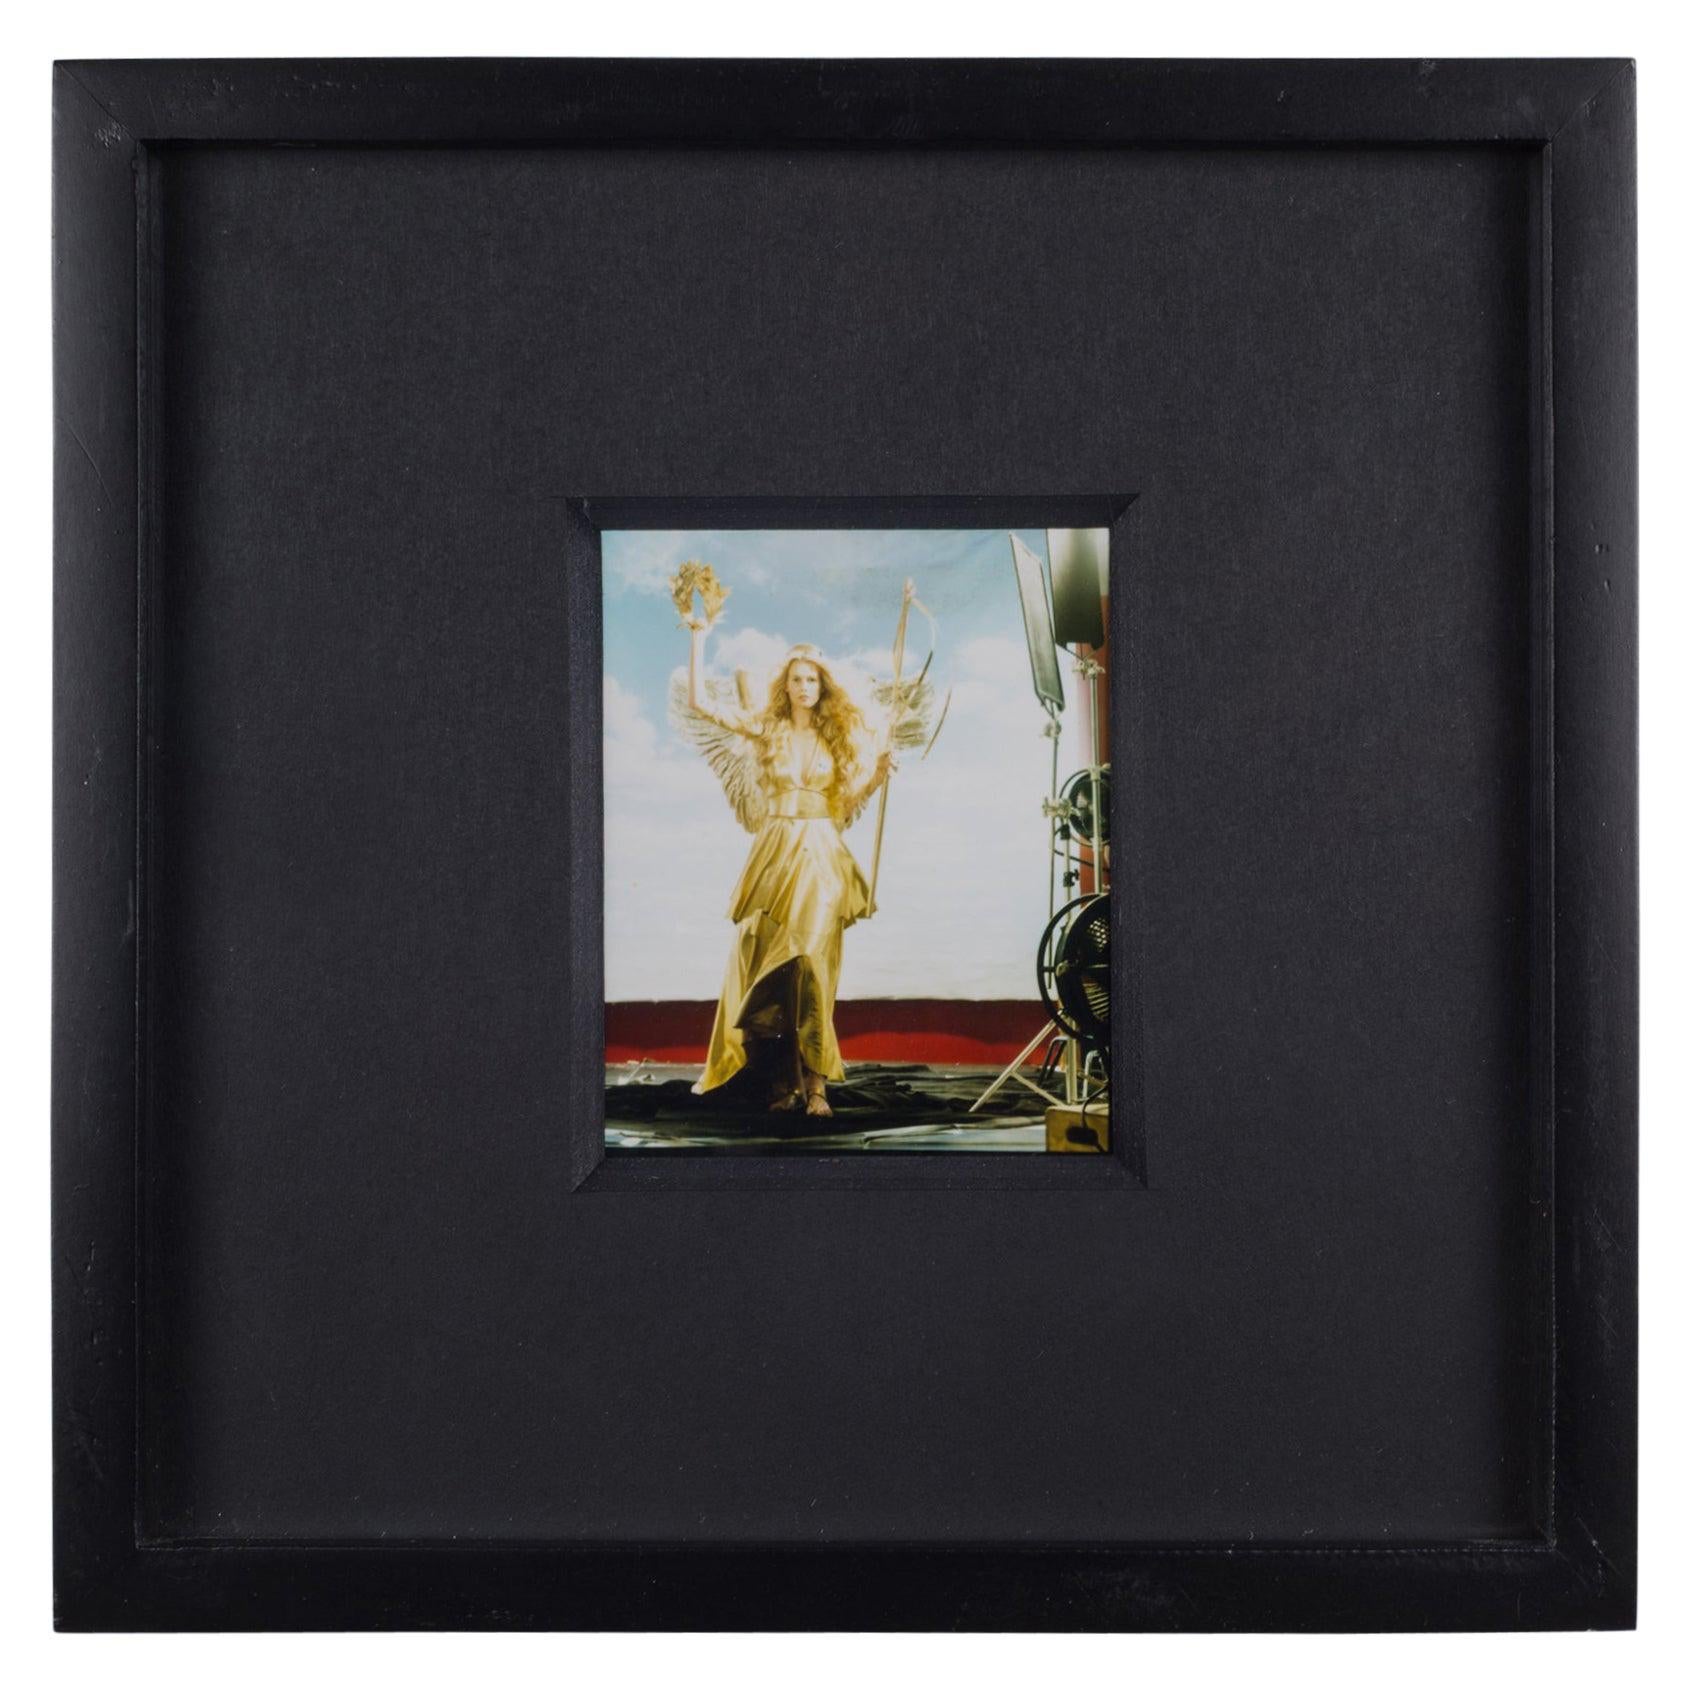 Polaroid-Testbild Nr. 5 von Denise Tarantino für Dah Len Studios